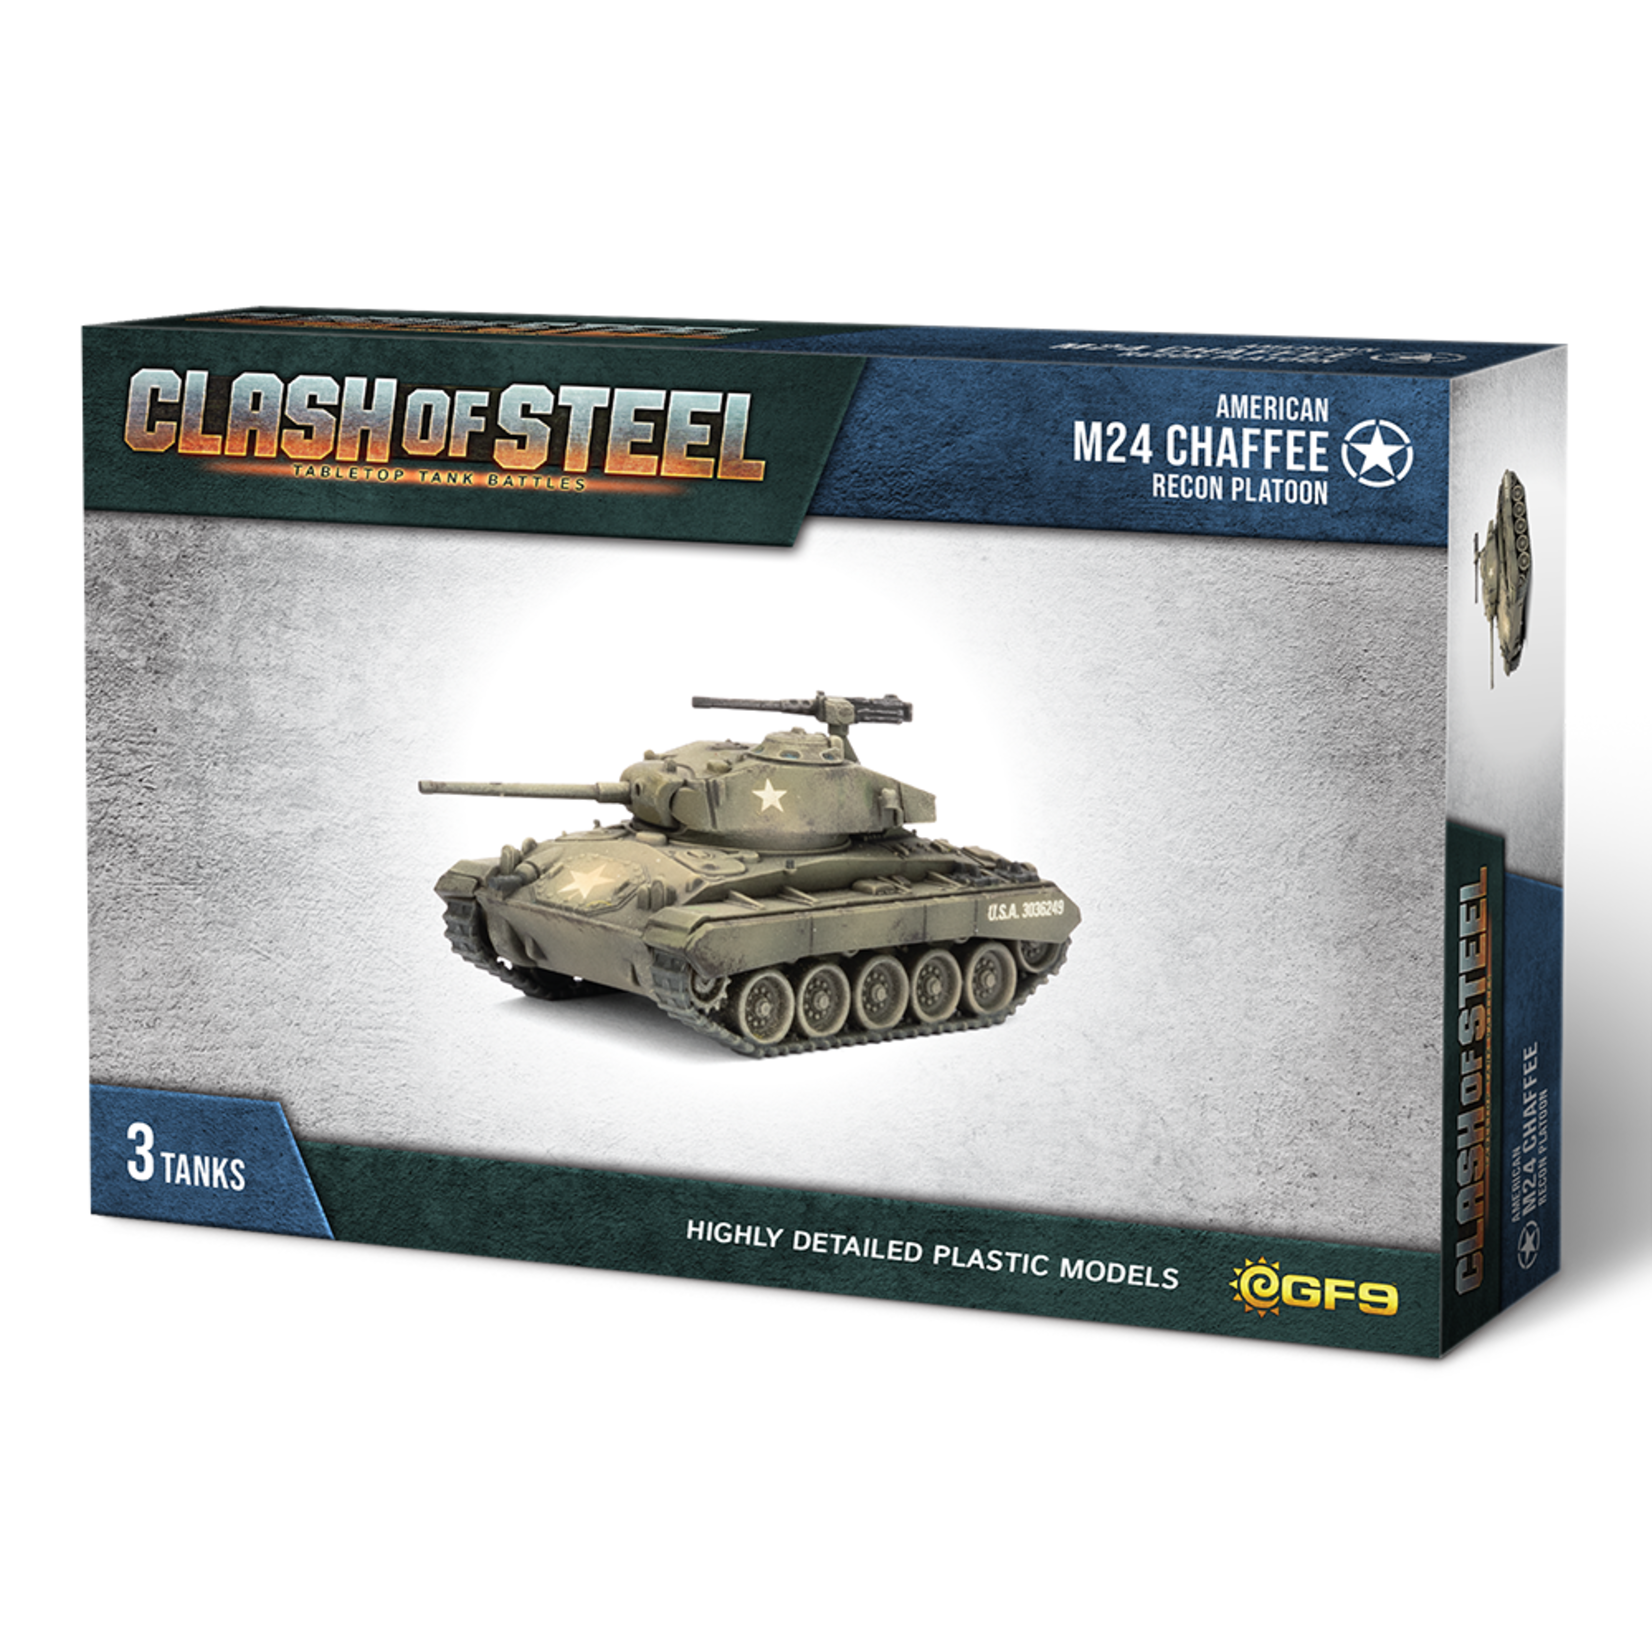 Battlefront Miniatures Clash of Steel M24 Chaffee Recon Platoon